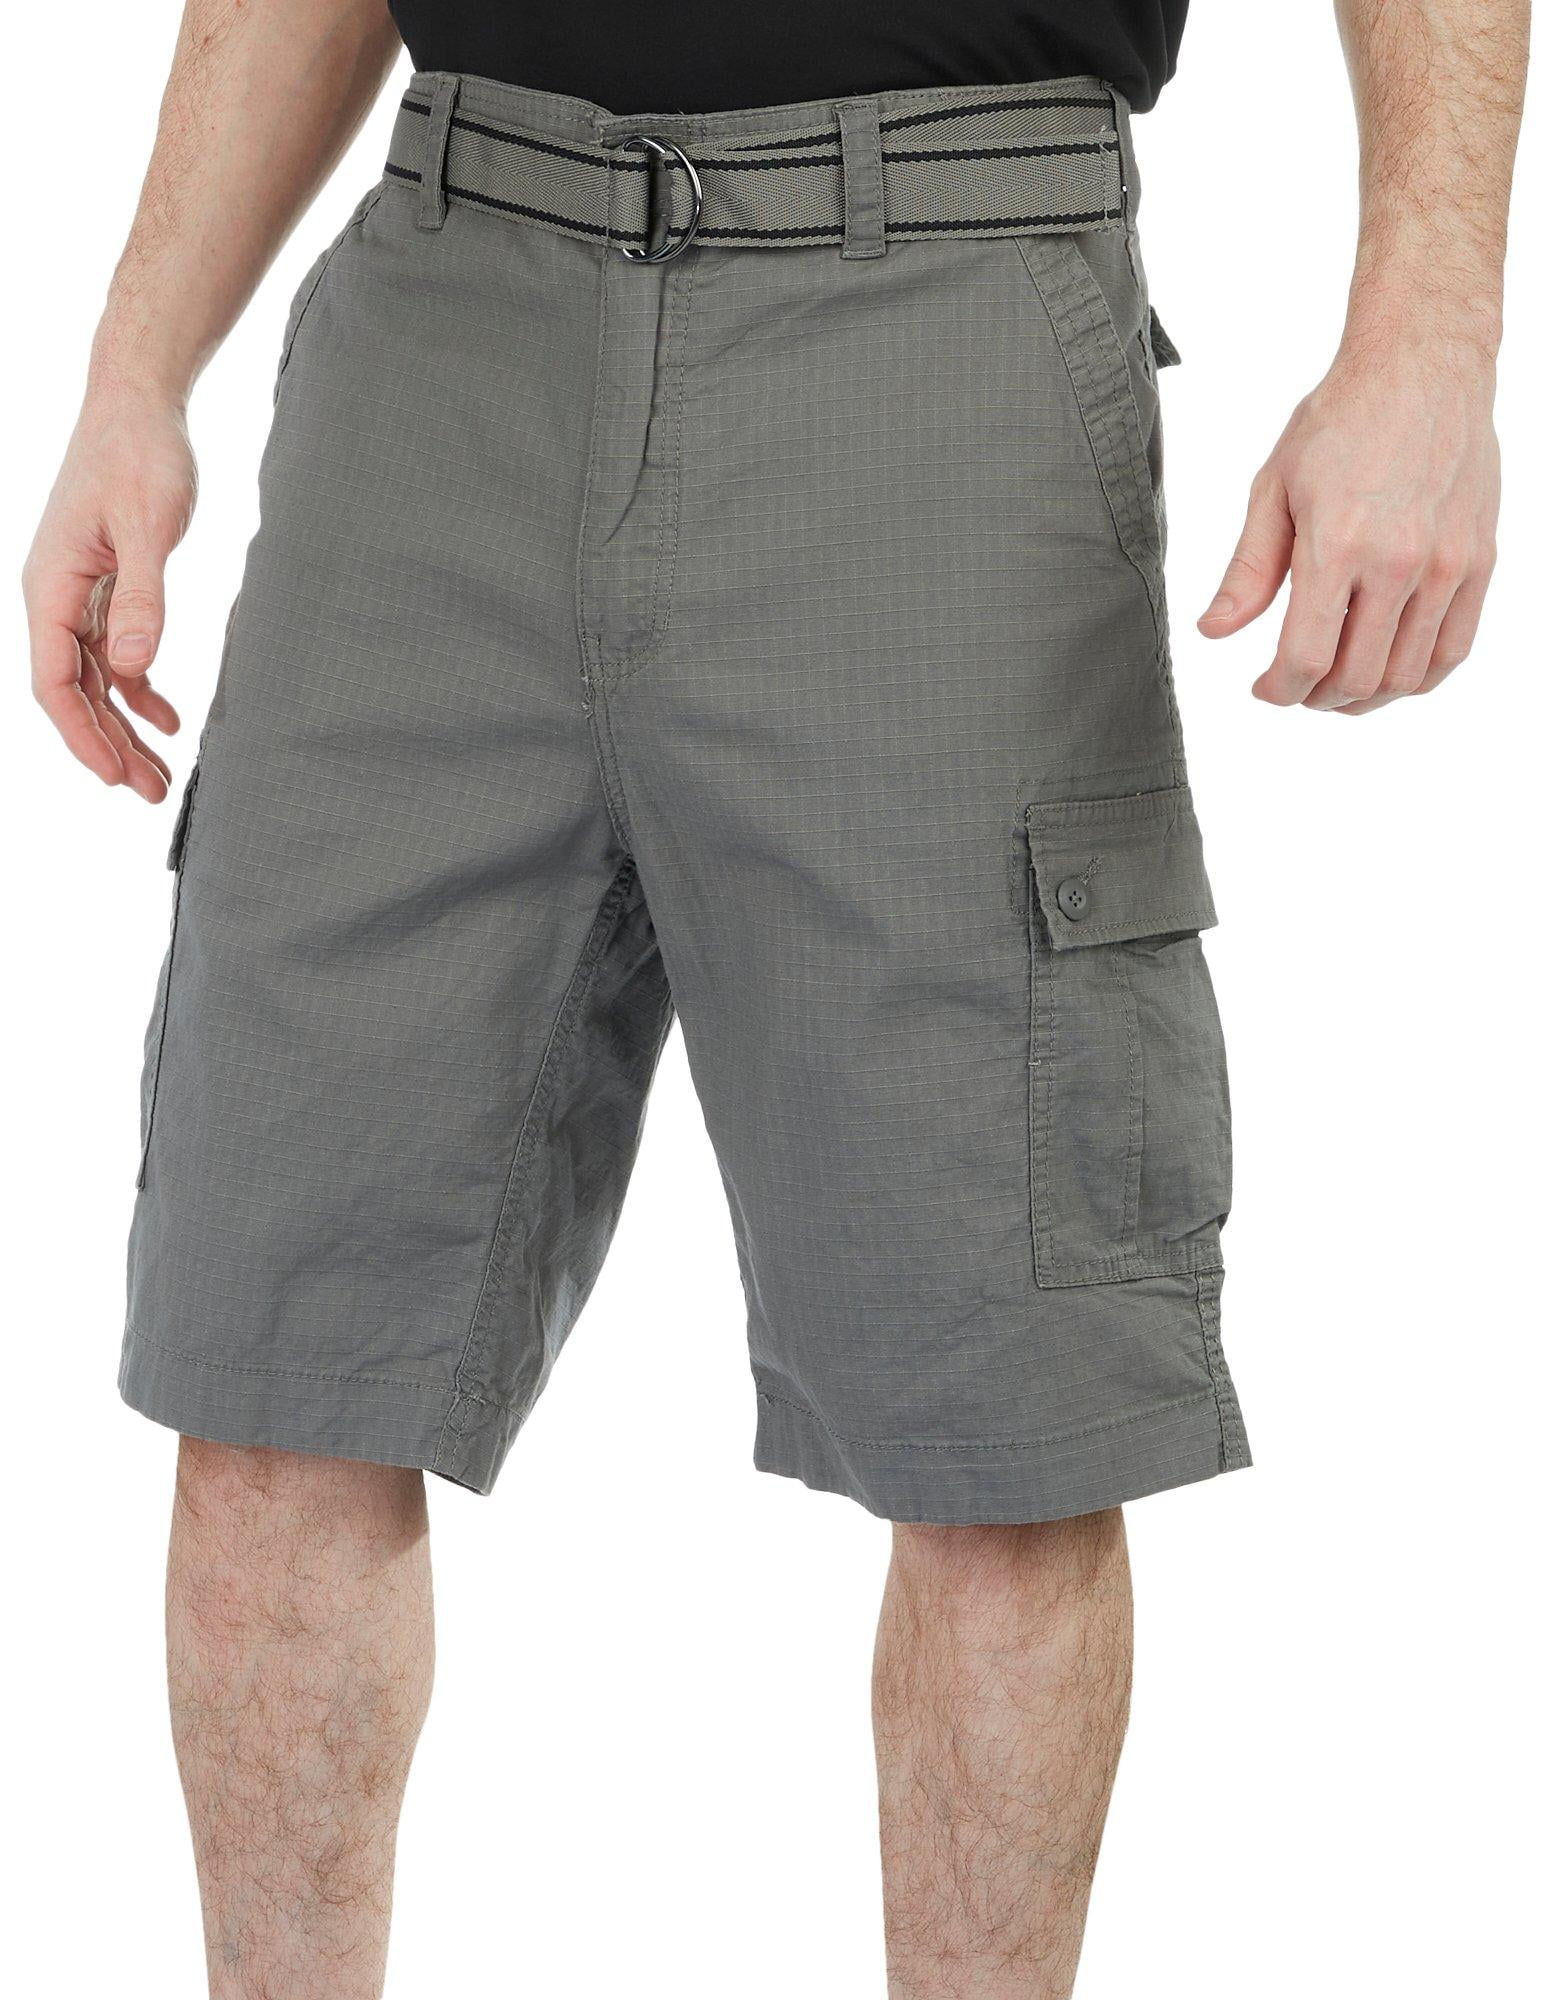 Wearfirst Mens Ripstop Cargo Shorts 30W Slate grey - Walmart.com